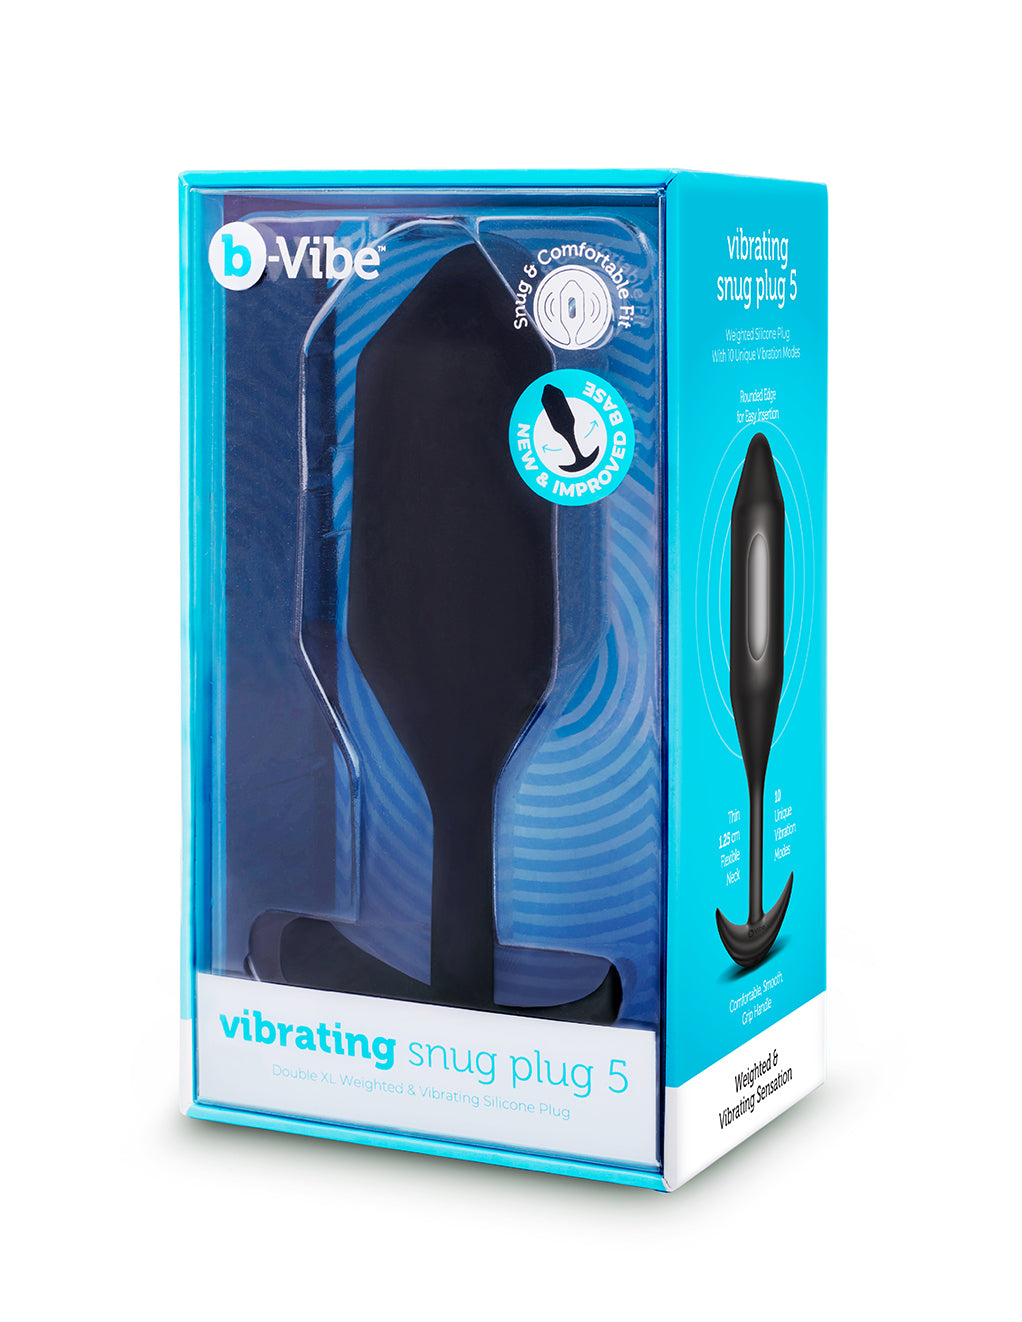 B-Vibe Vibrating Snug Plug 5 XXL- Package